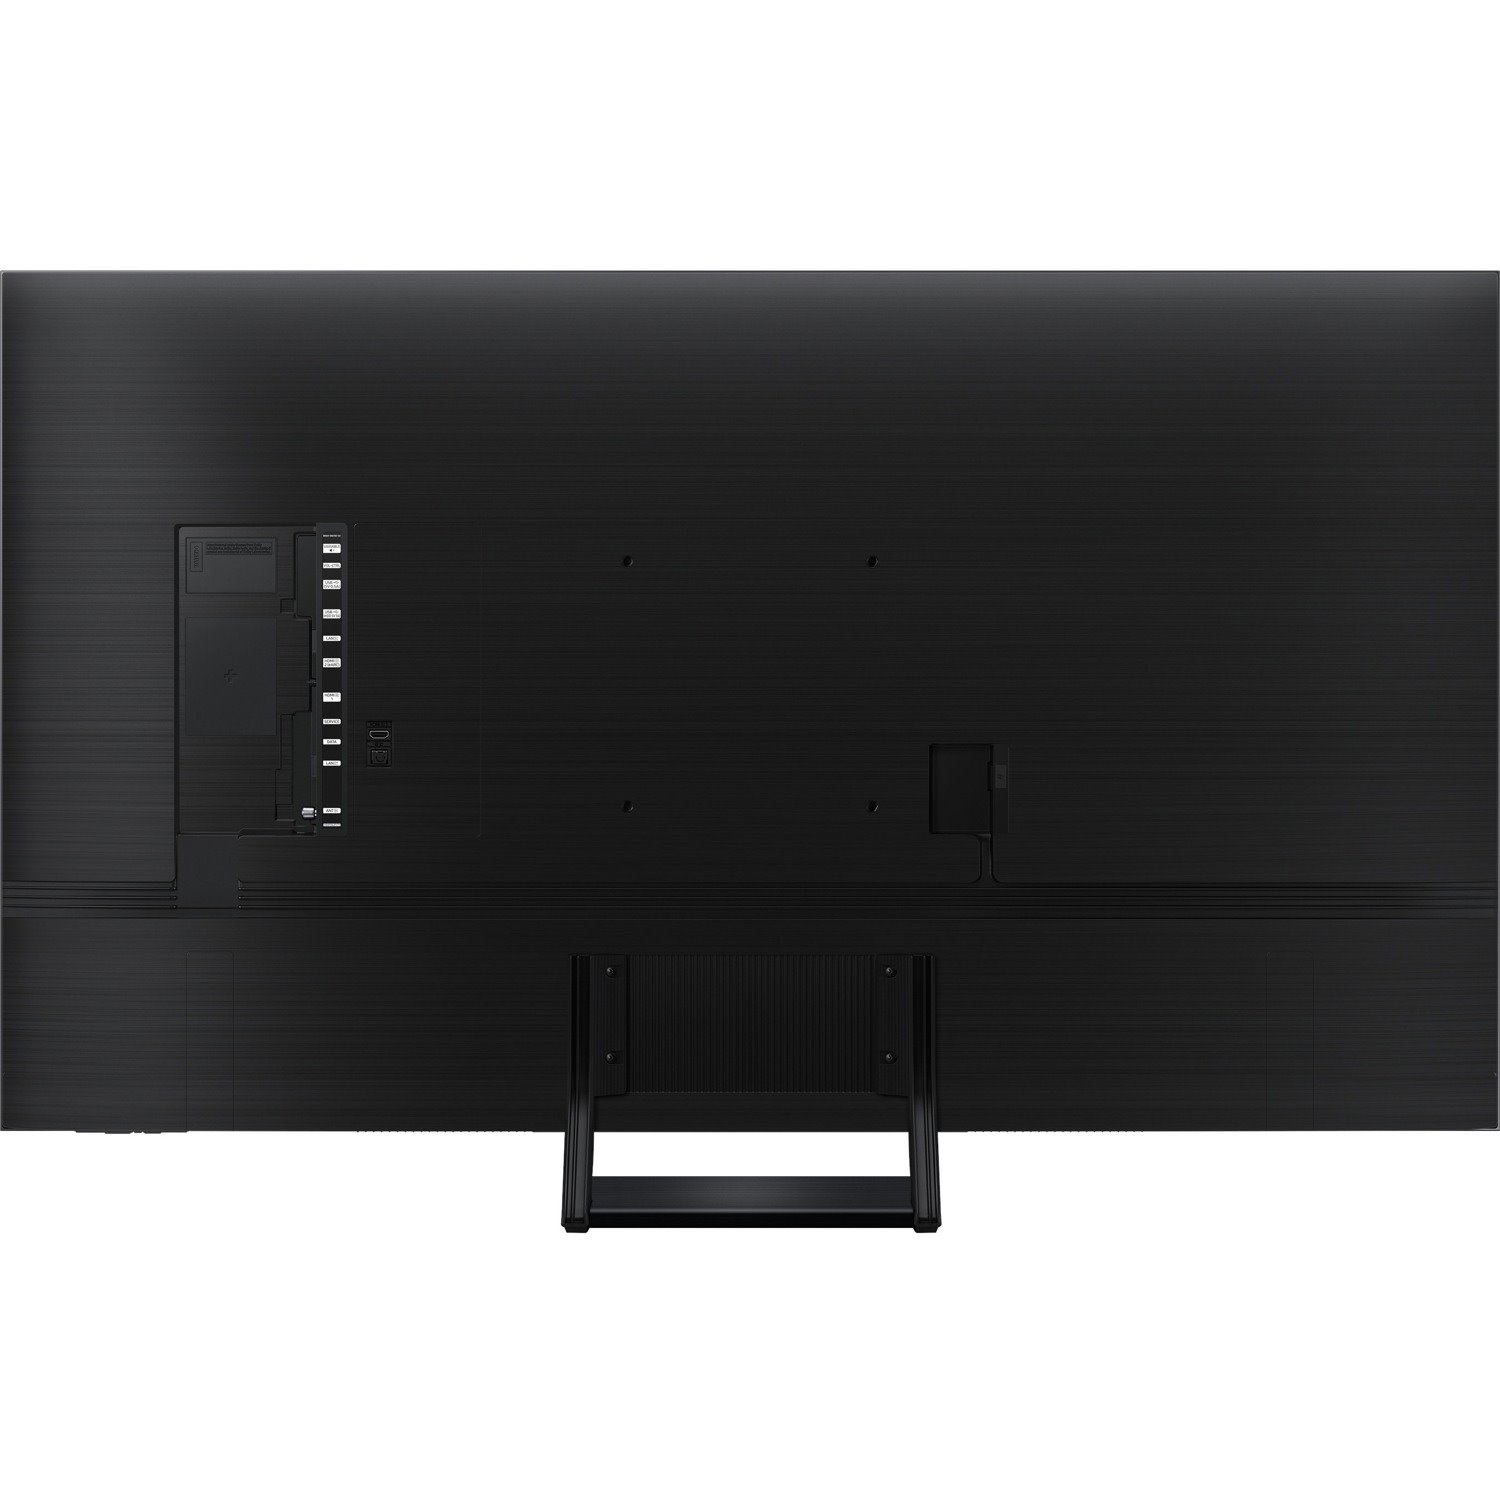 Samsung HQ60A HG65Q60AAAW 165.1 cm Smart LED-LCD TV - 4K UHDTV - Black